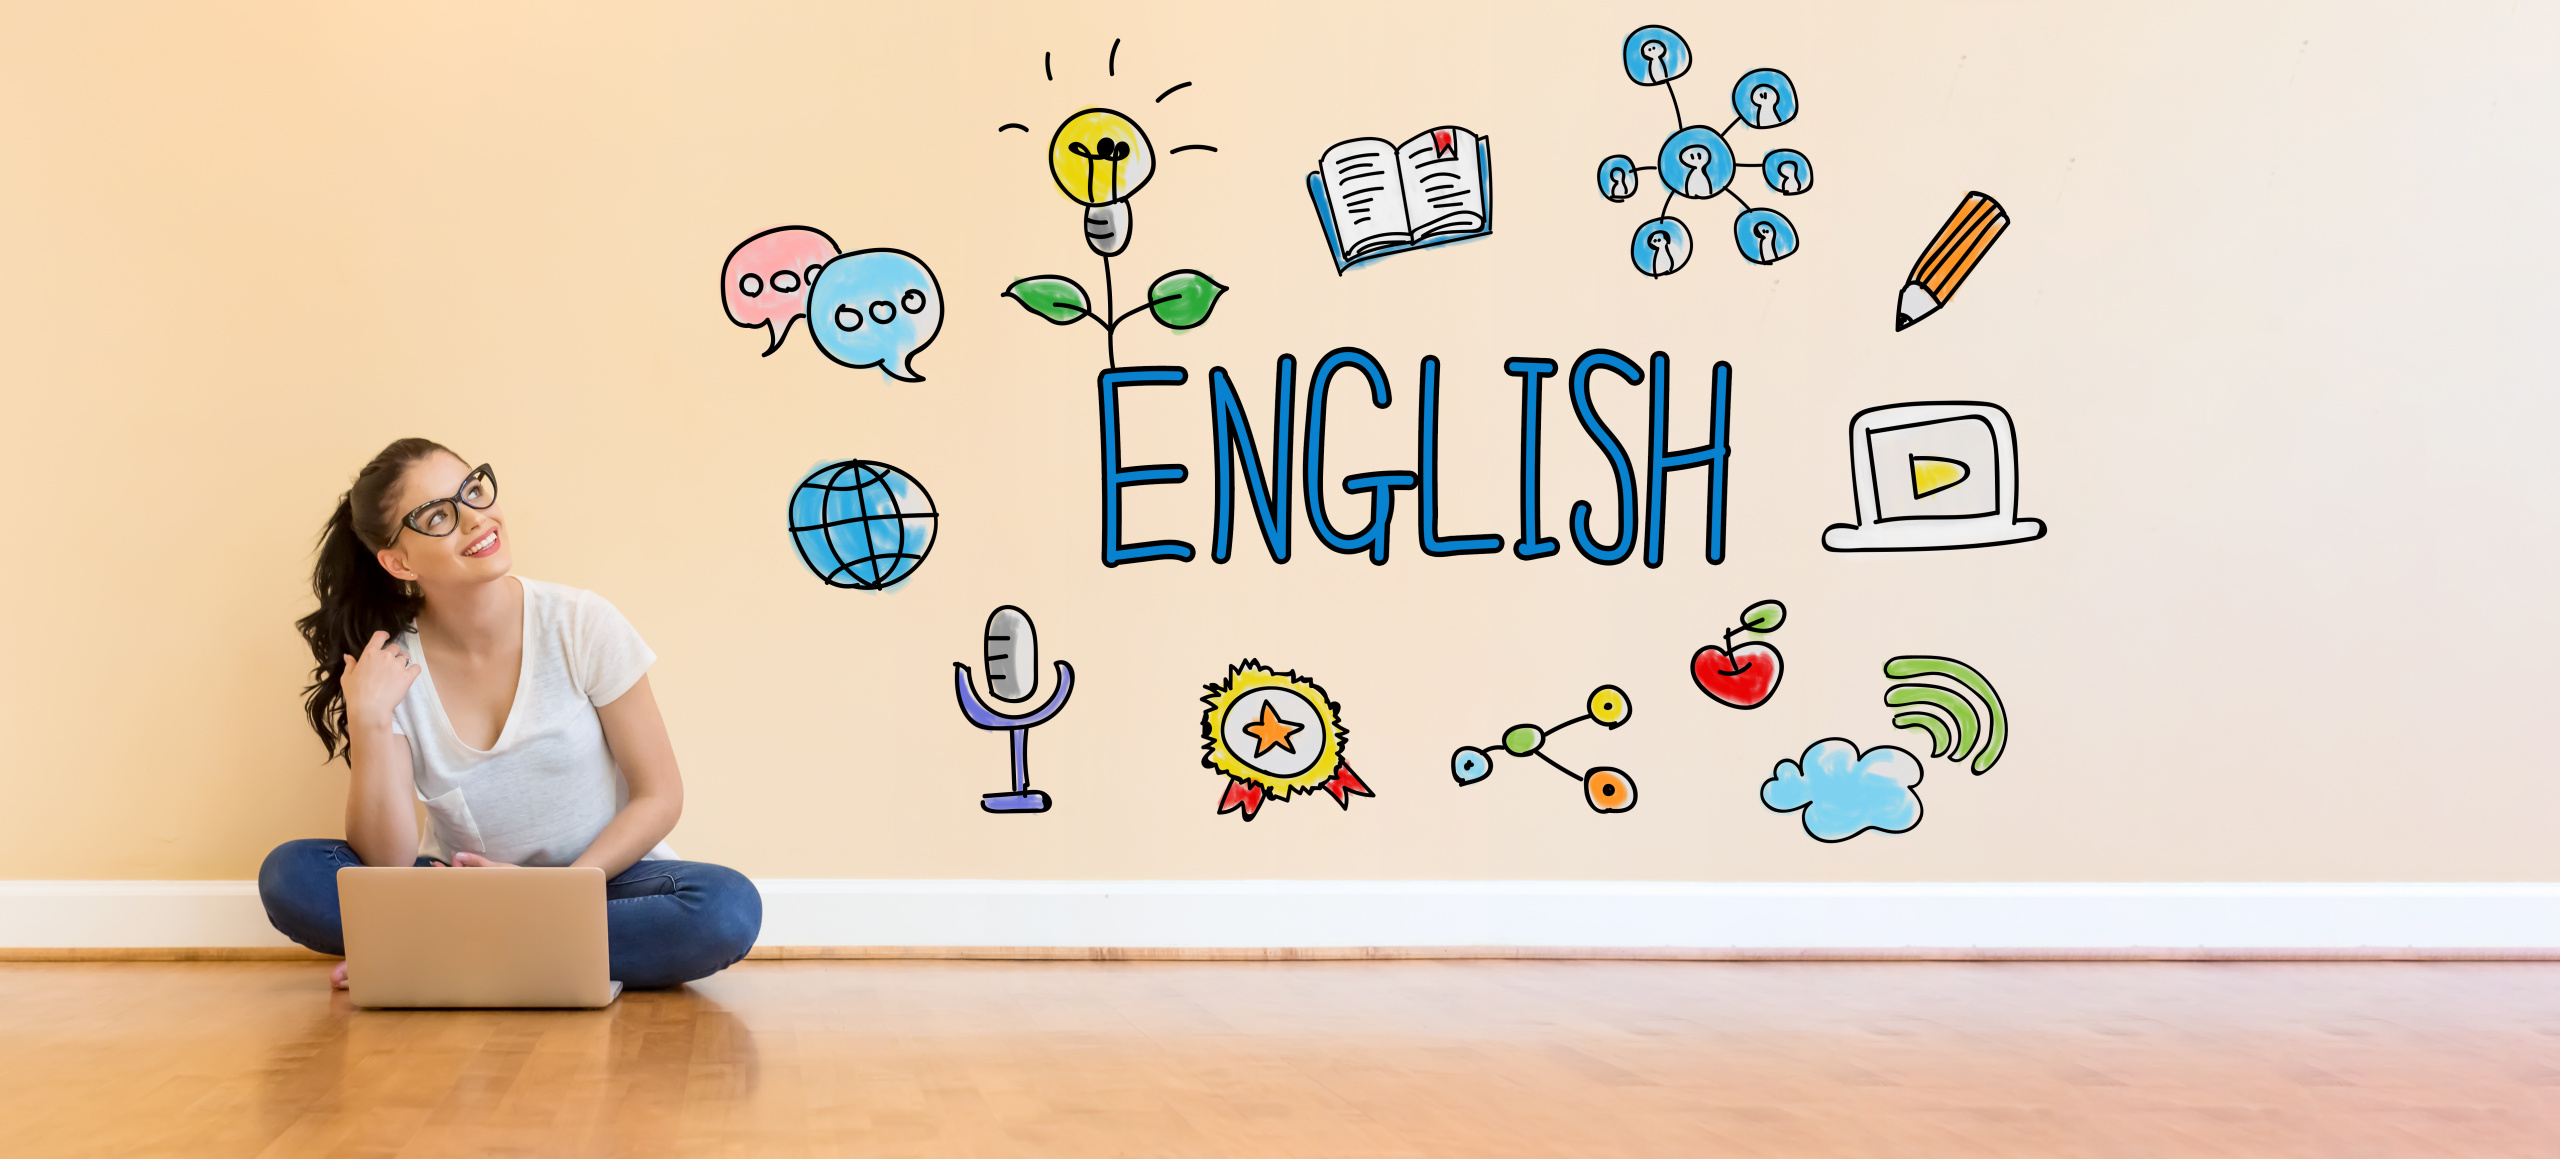 We like speaking english. Learn Инглиш. English Lessons обложка. English Lesson обои. Иллюстрации learn English.